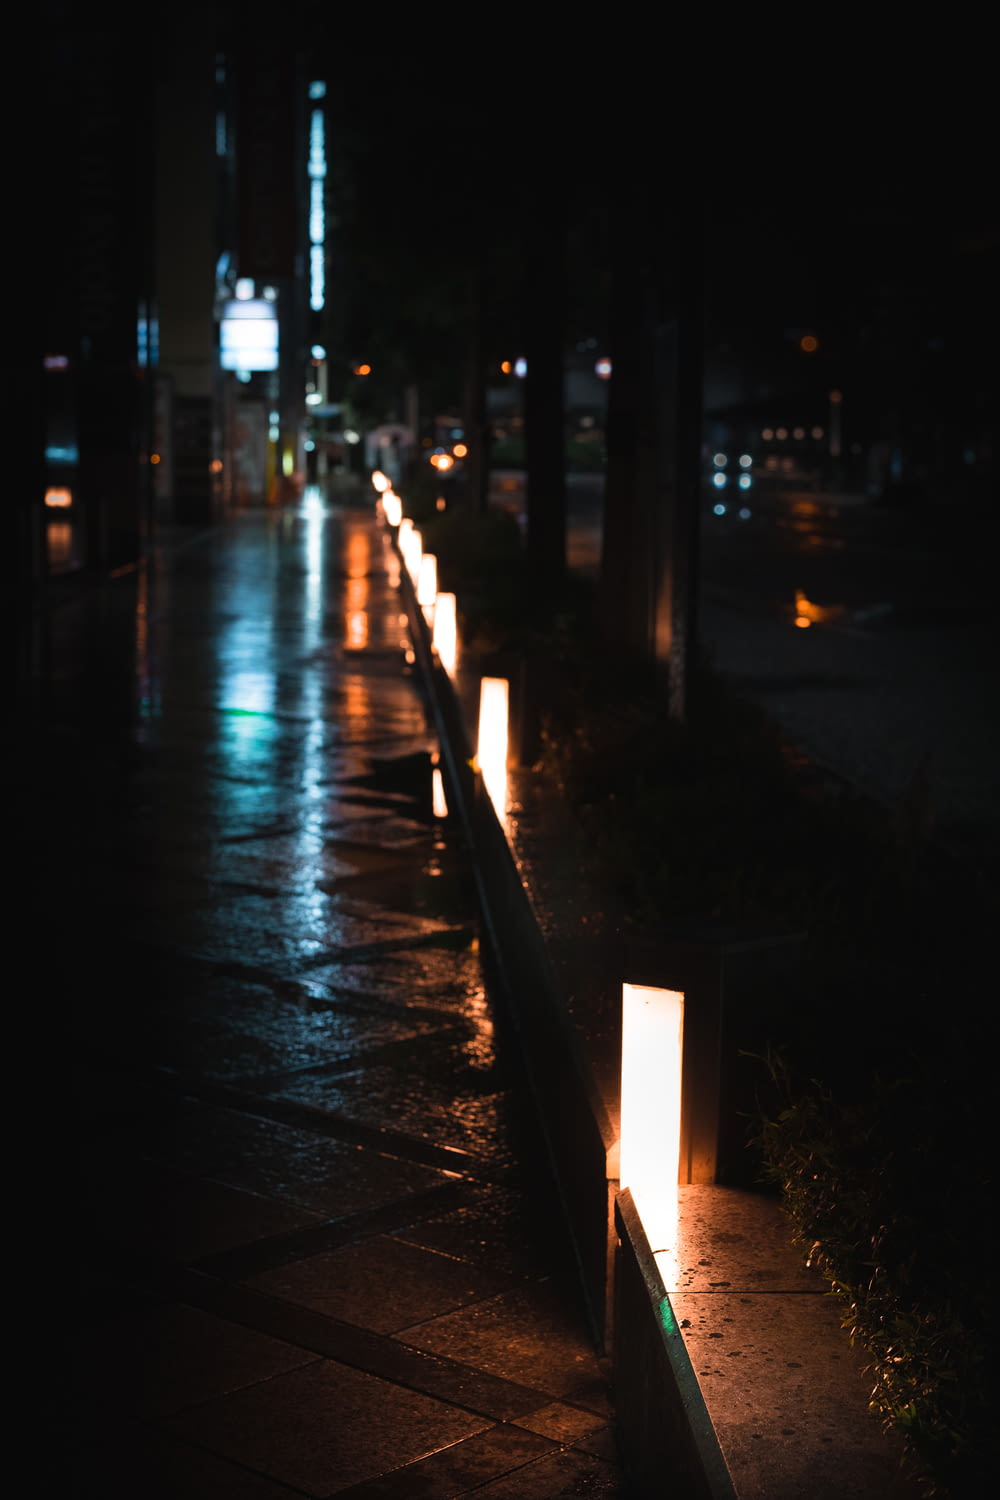 Luces de la calle encendidas durante la noche